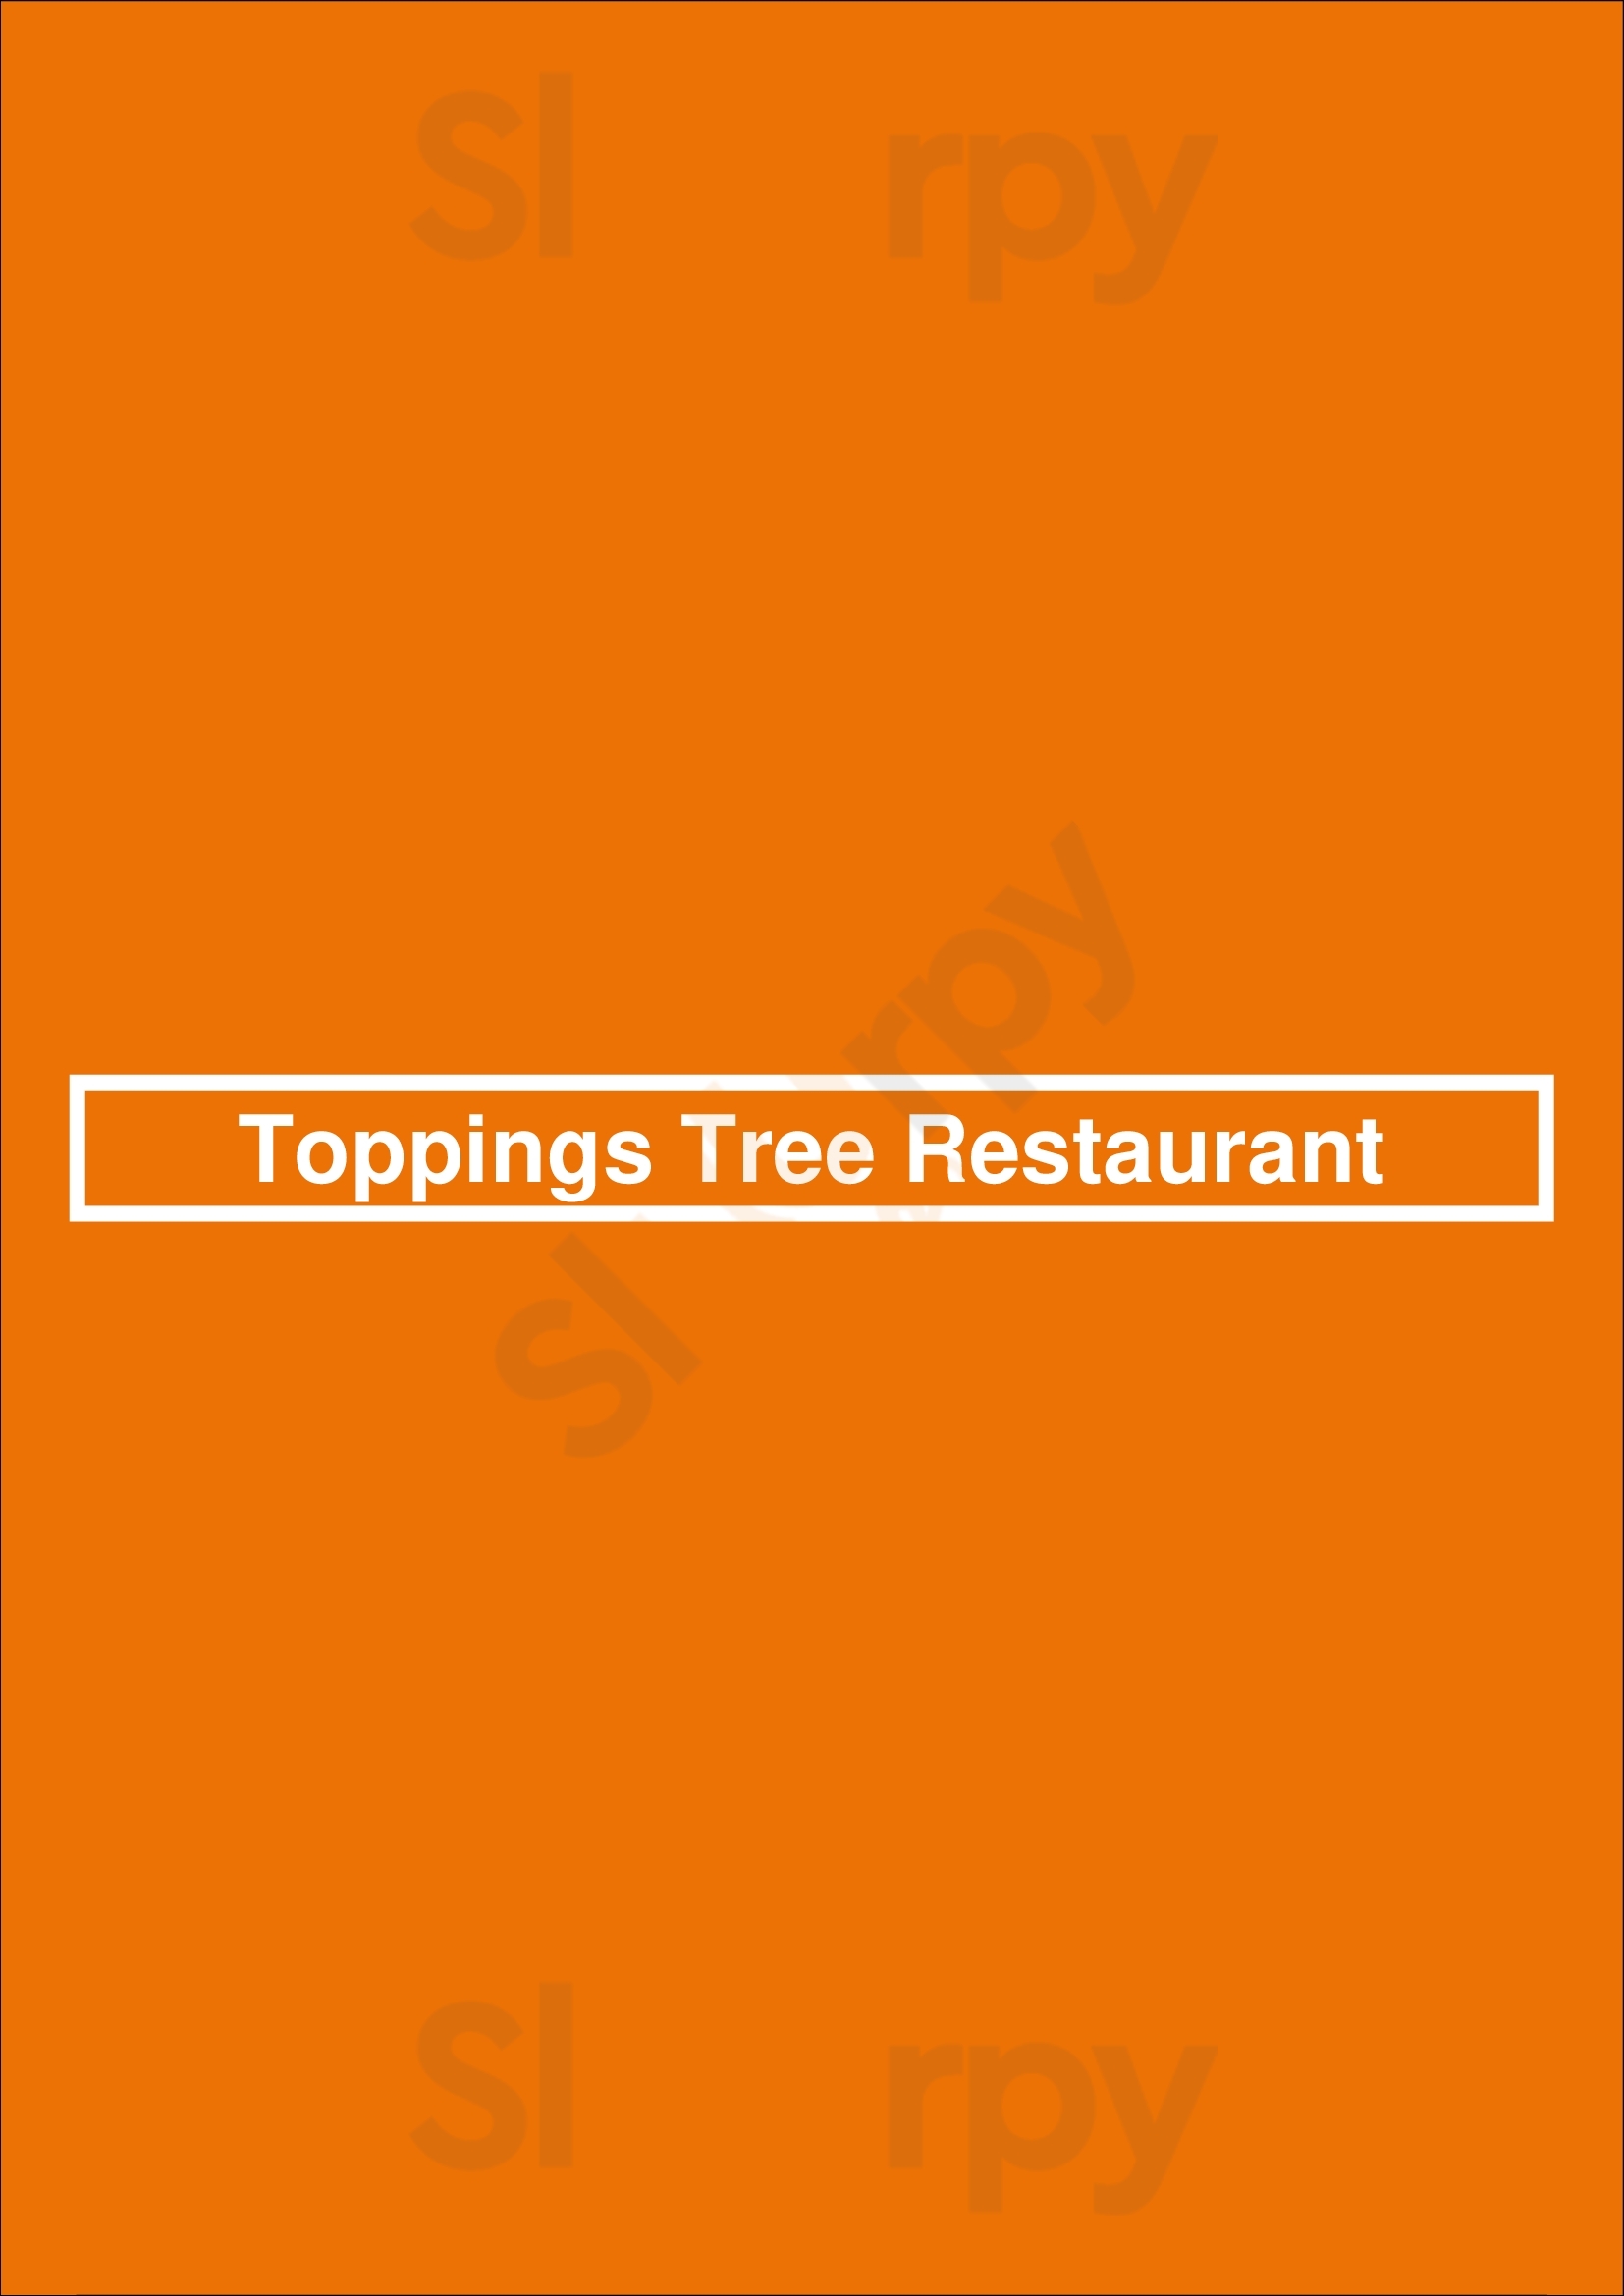 Toppings Tree Restaurant Santa Clara Menu - 1